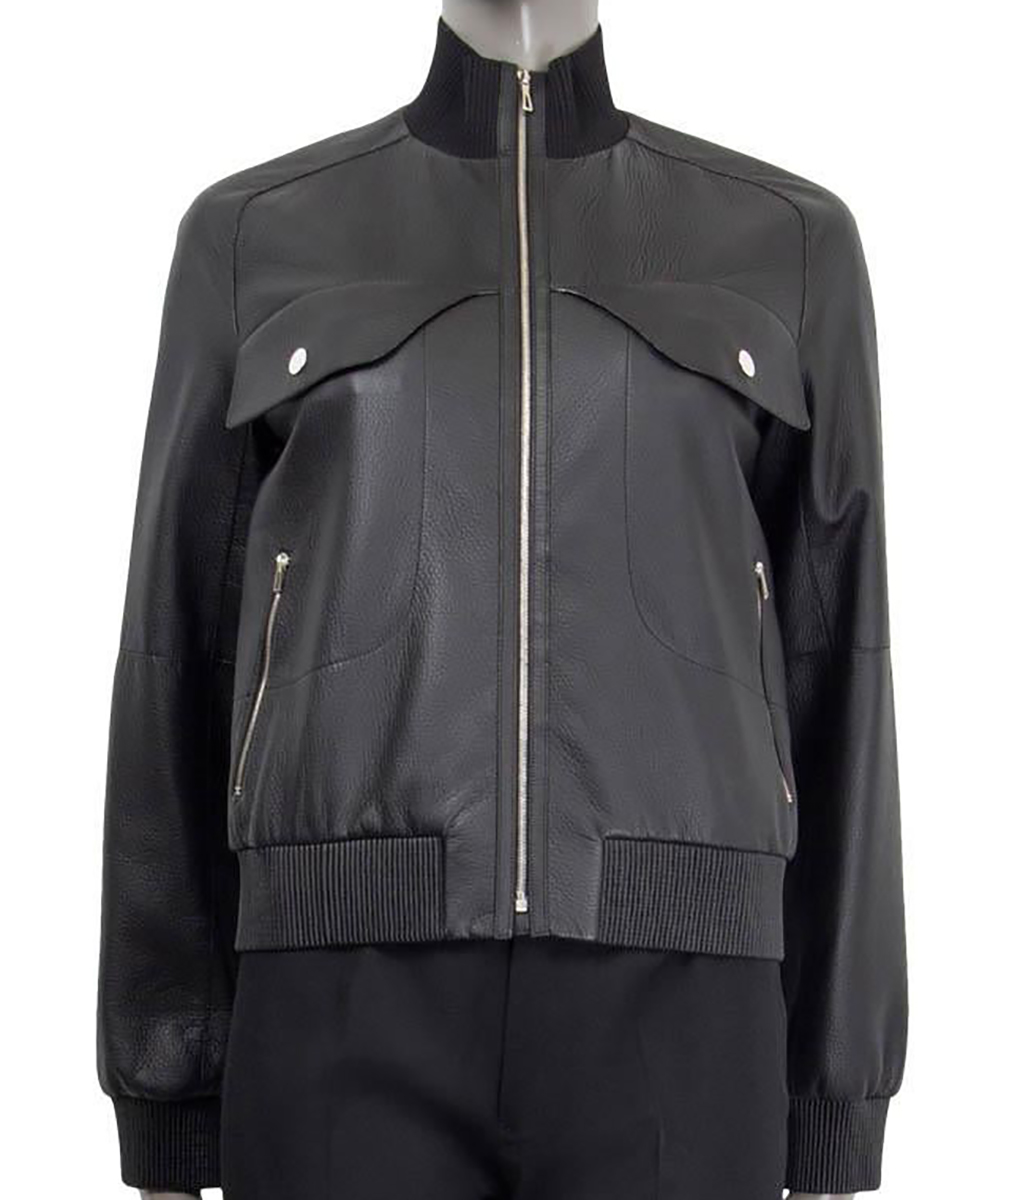 Celina Black Leather Jacket